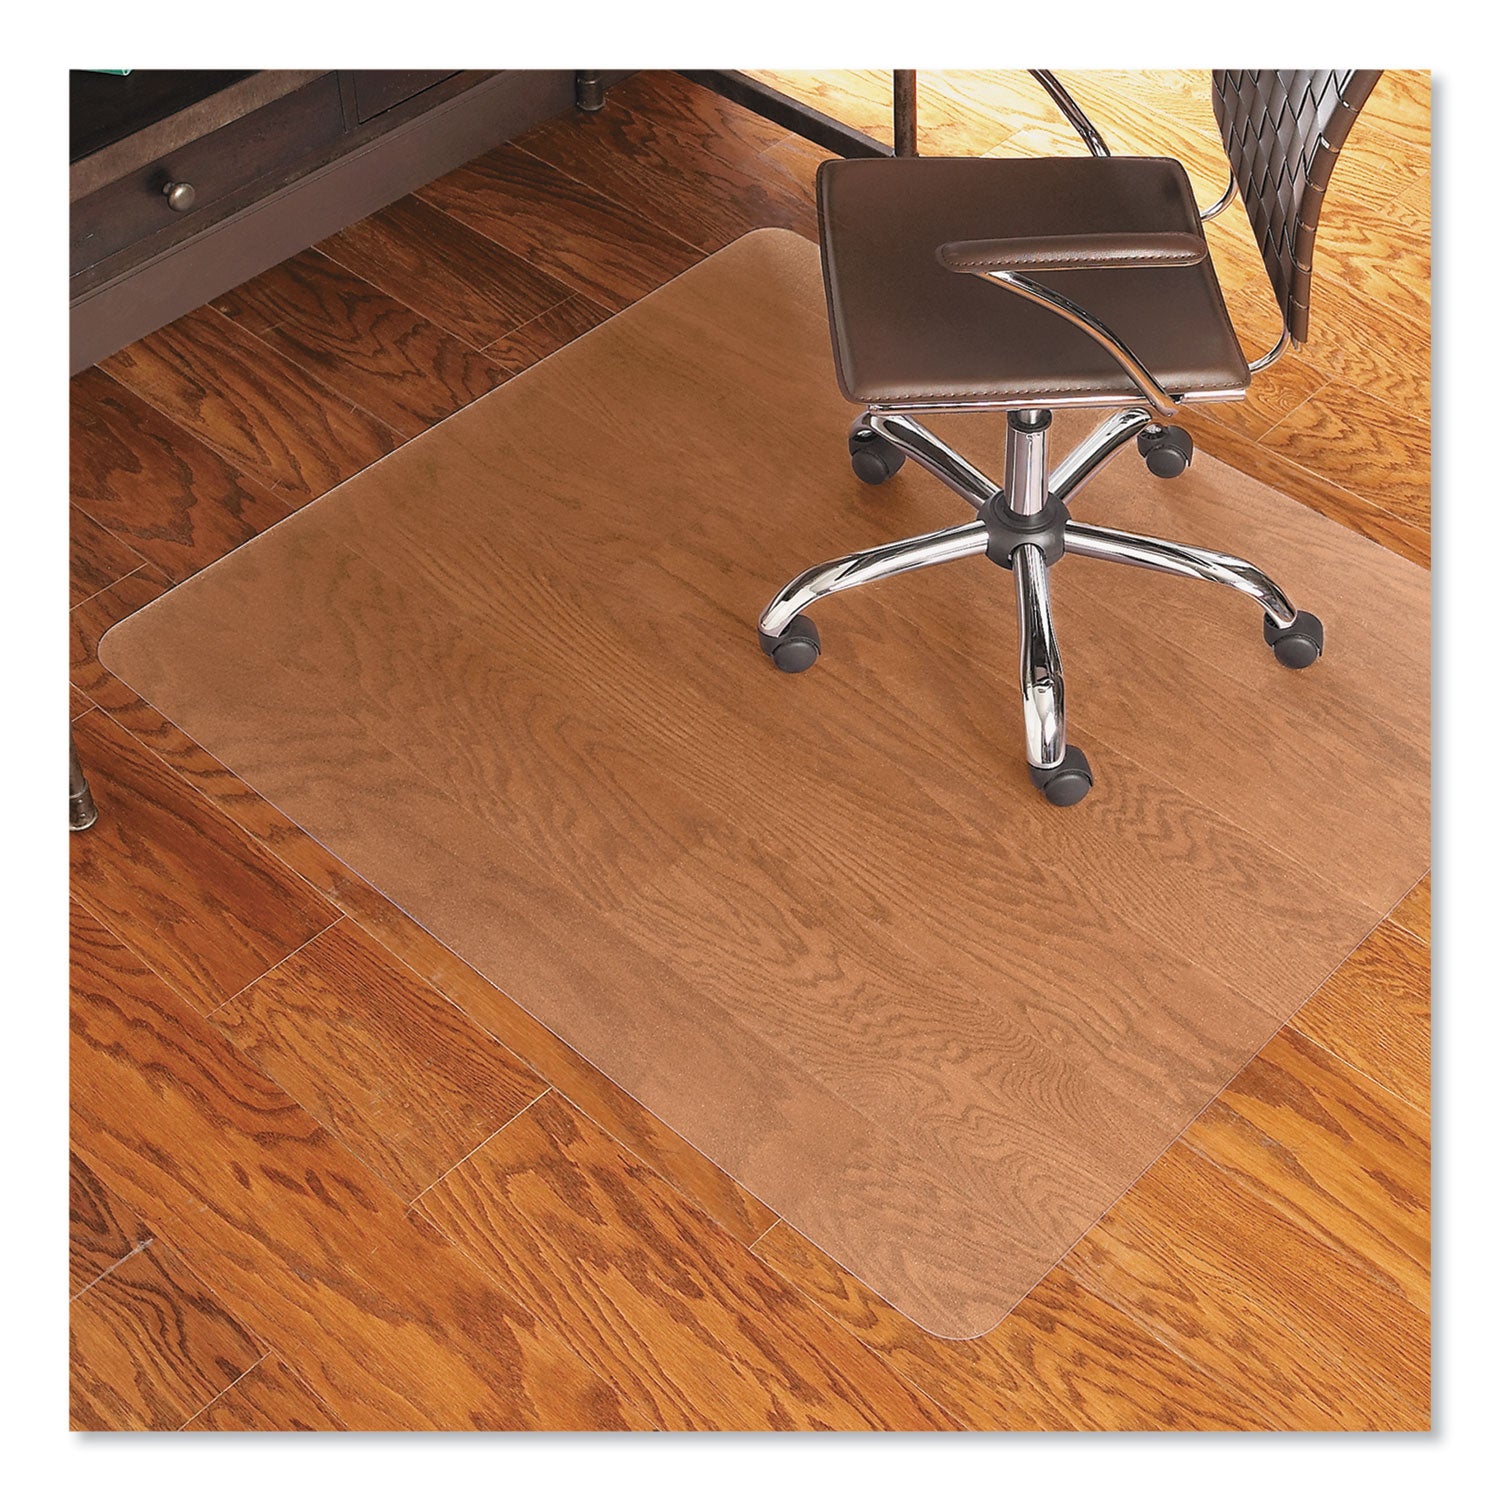 EverLife Chair Mat for Hard Floors, Light Use, Rectangular, 46 x 60, Clear - 